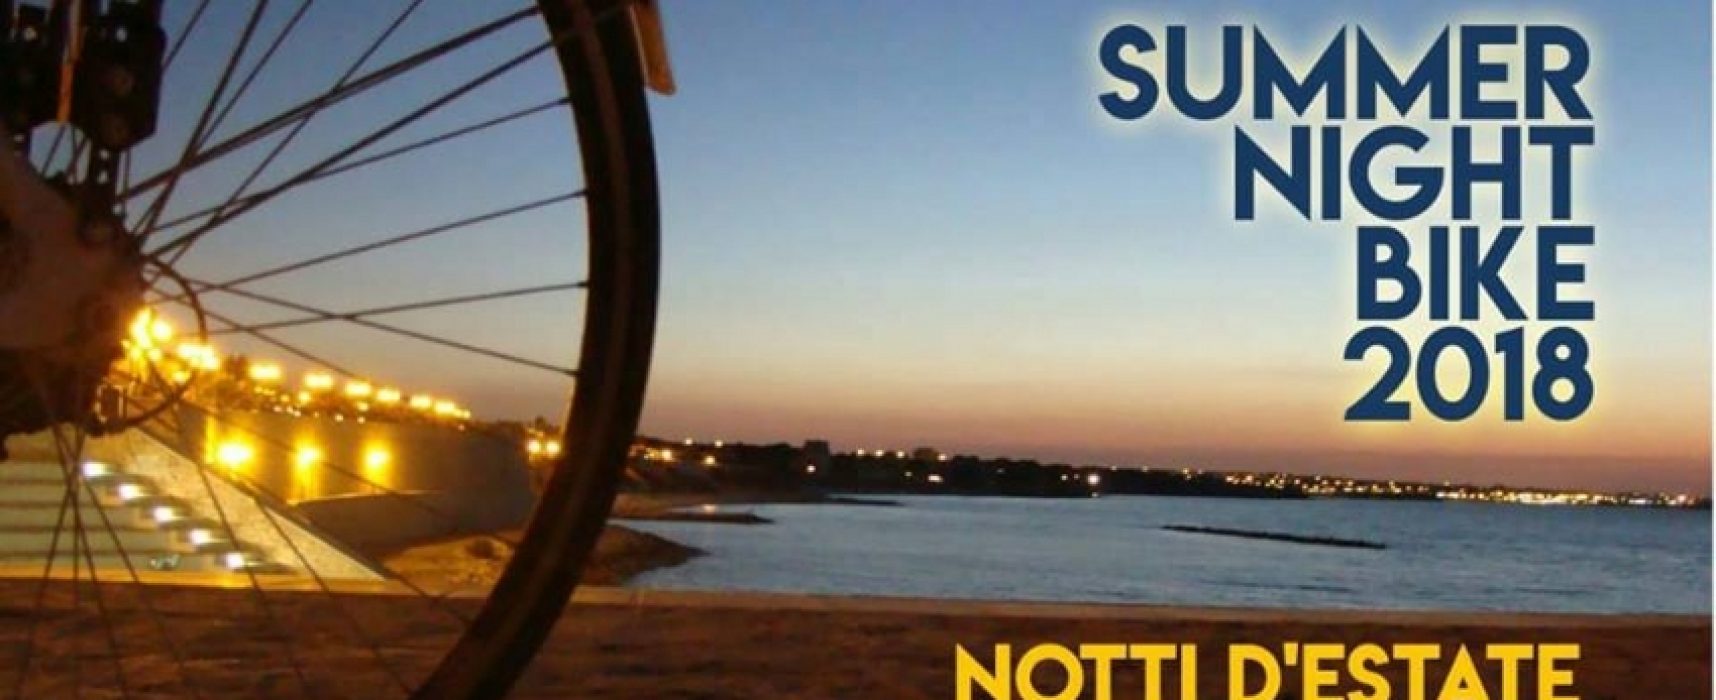 Torna “Summer Night Bike 2018”, il PROGRAMMA degli appuntamenti